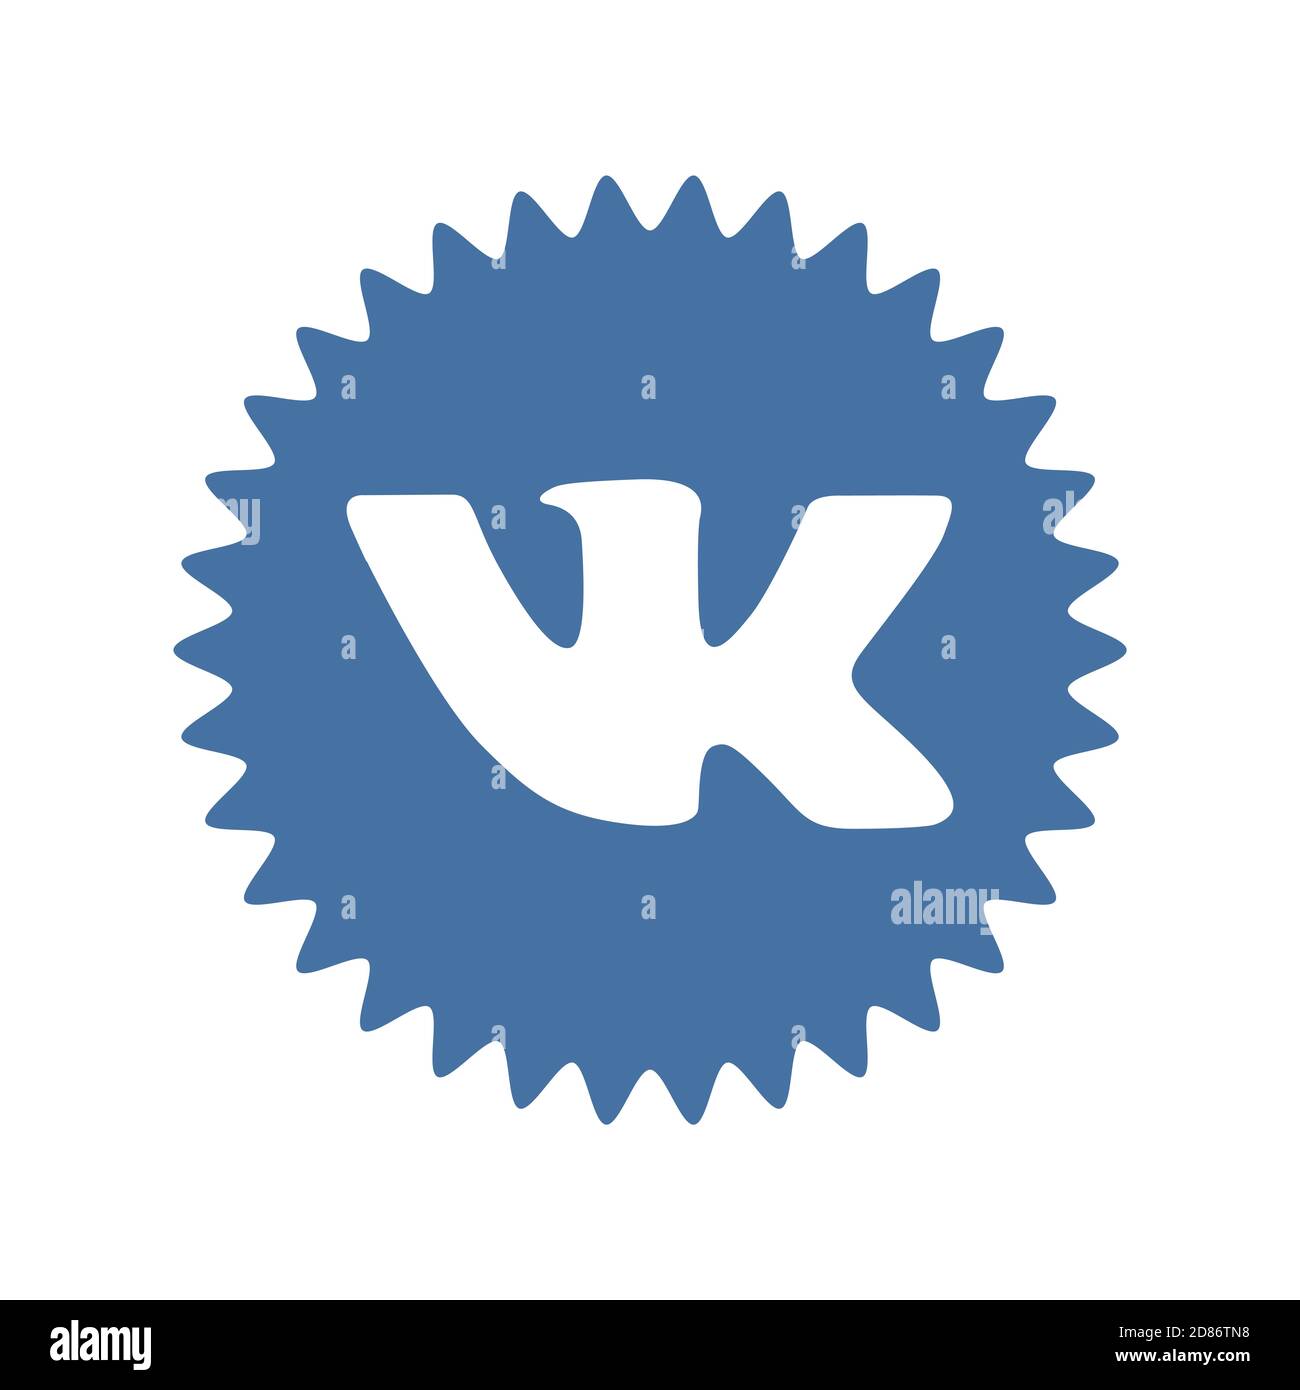 Vk - Vk Png Logo PNG Image With Transparent Background | TOPpng